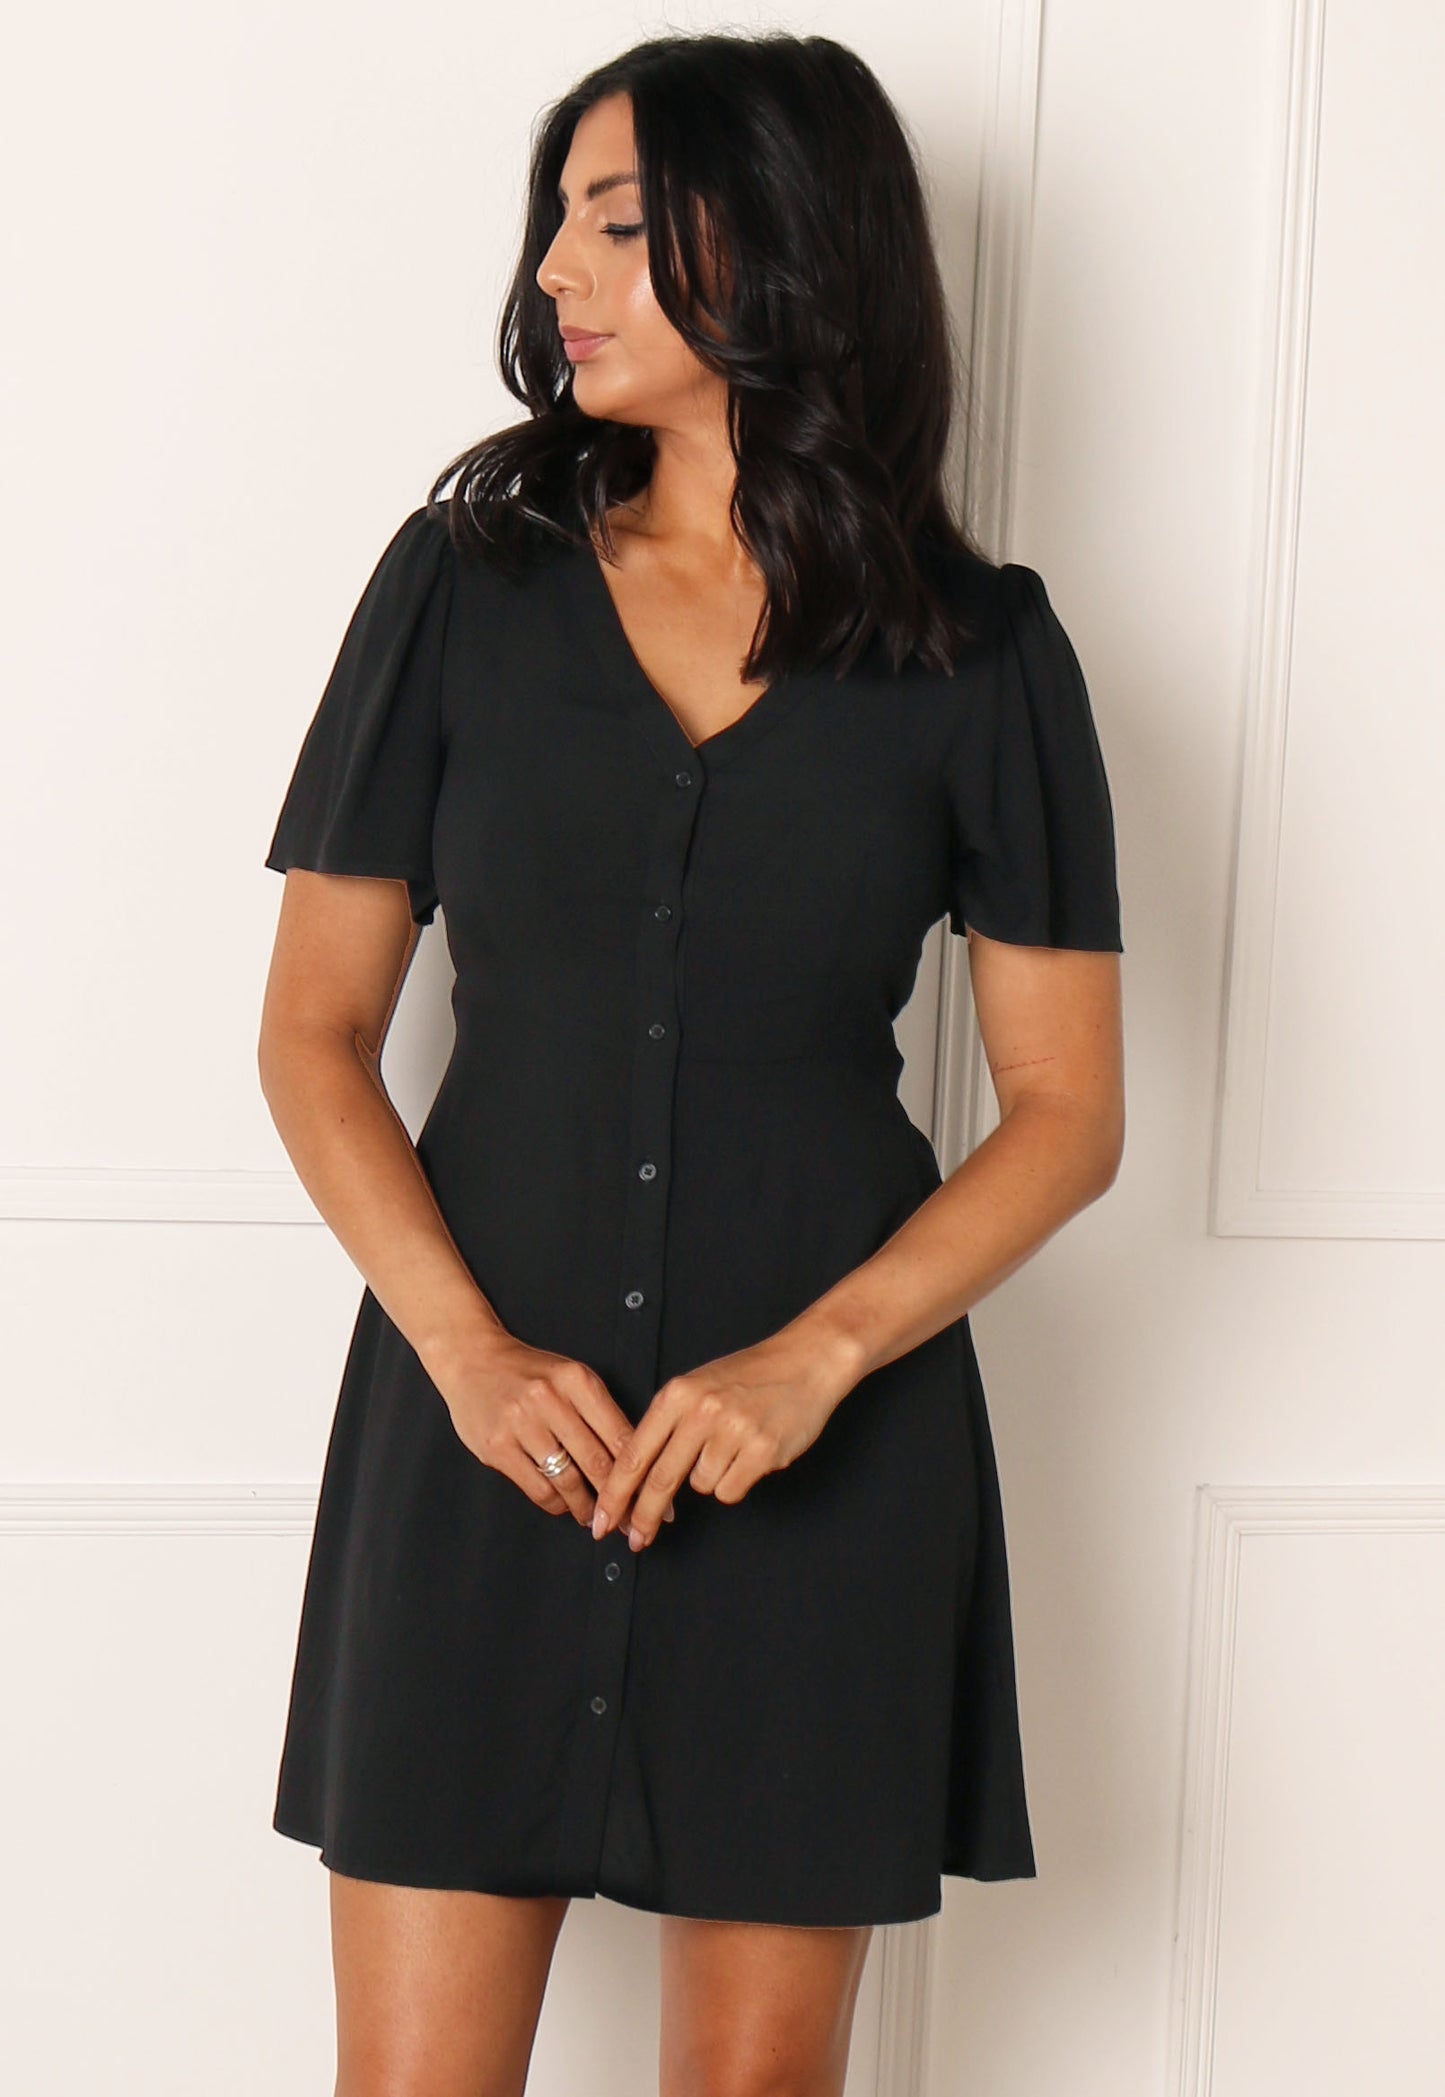 VERO MODA Alba Button Through Fit & Flare Sundress with Short Sleeves in Black - concretebartops